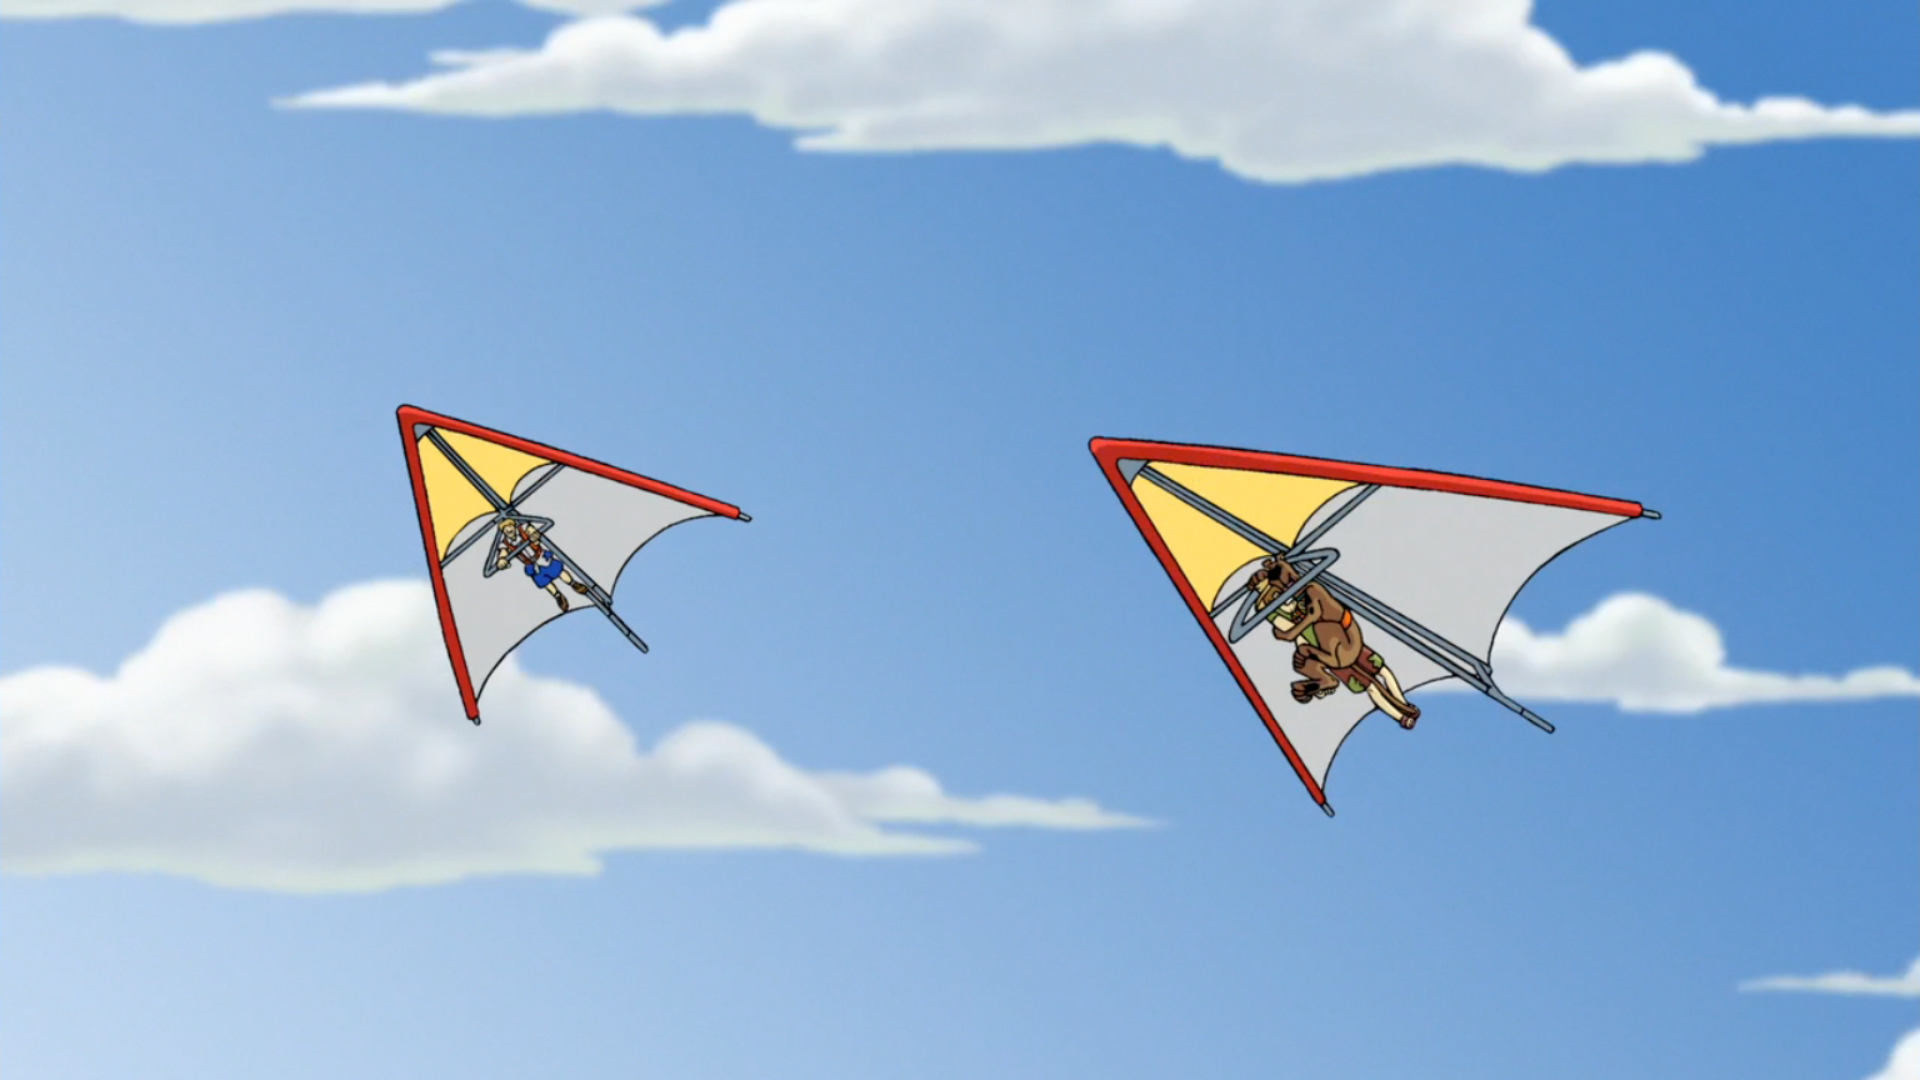 Hang glider | Scoobypedia | FANDOM powered by Wikia